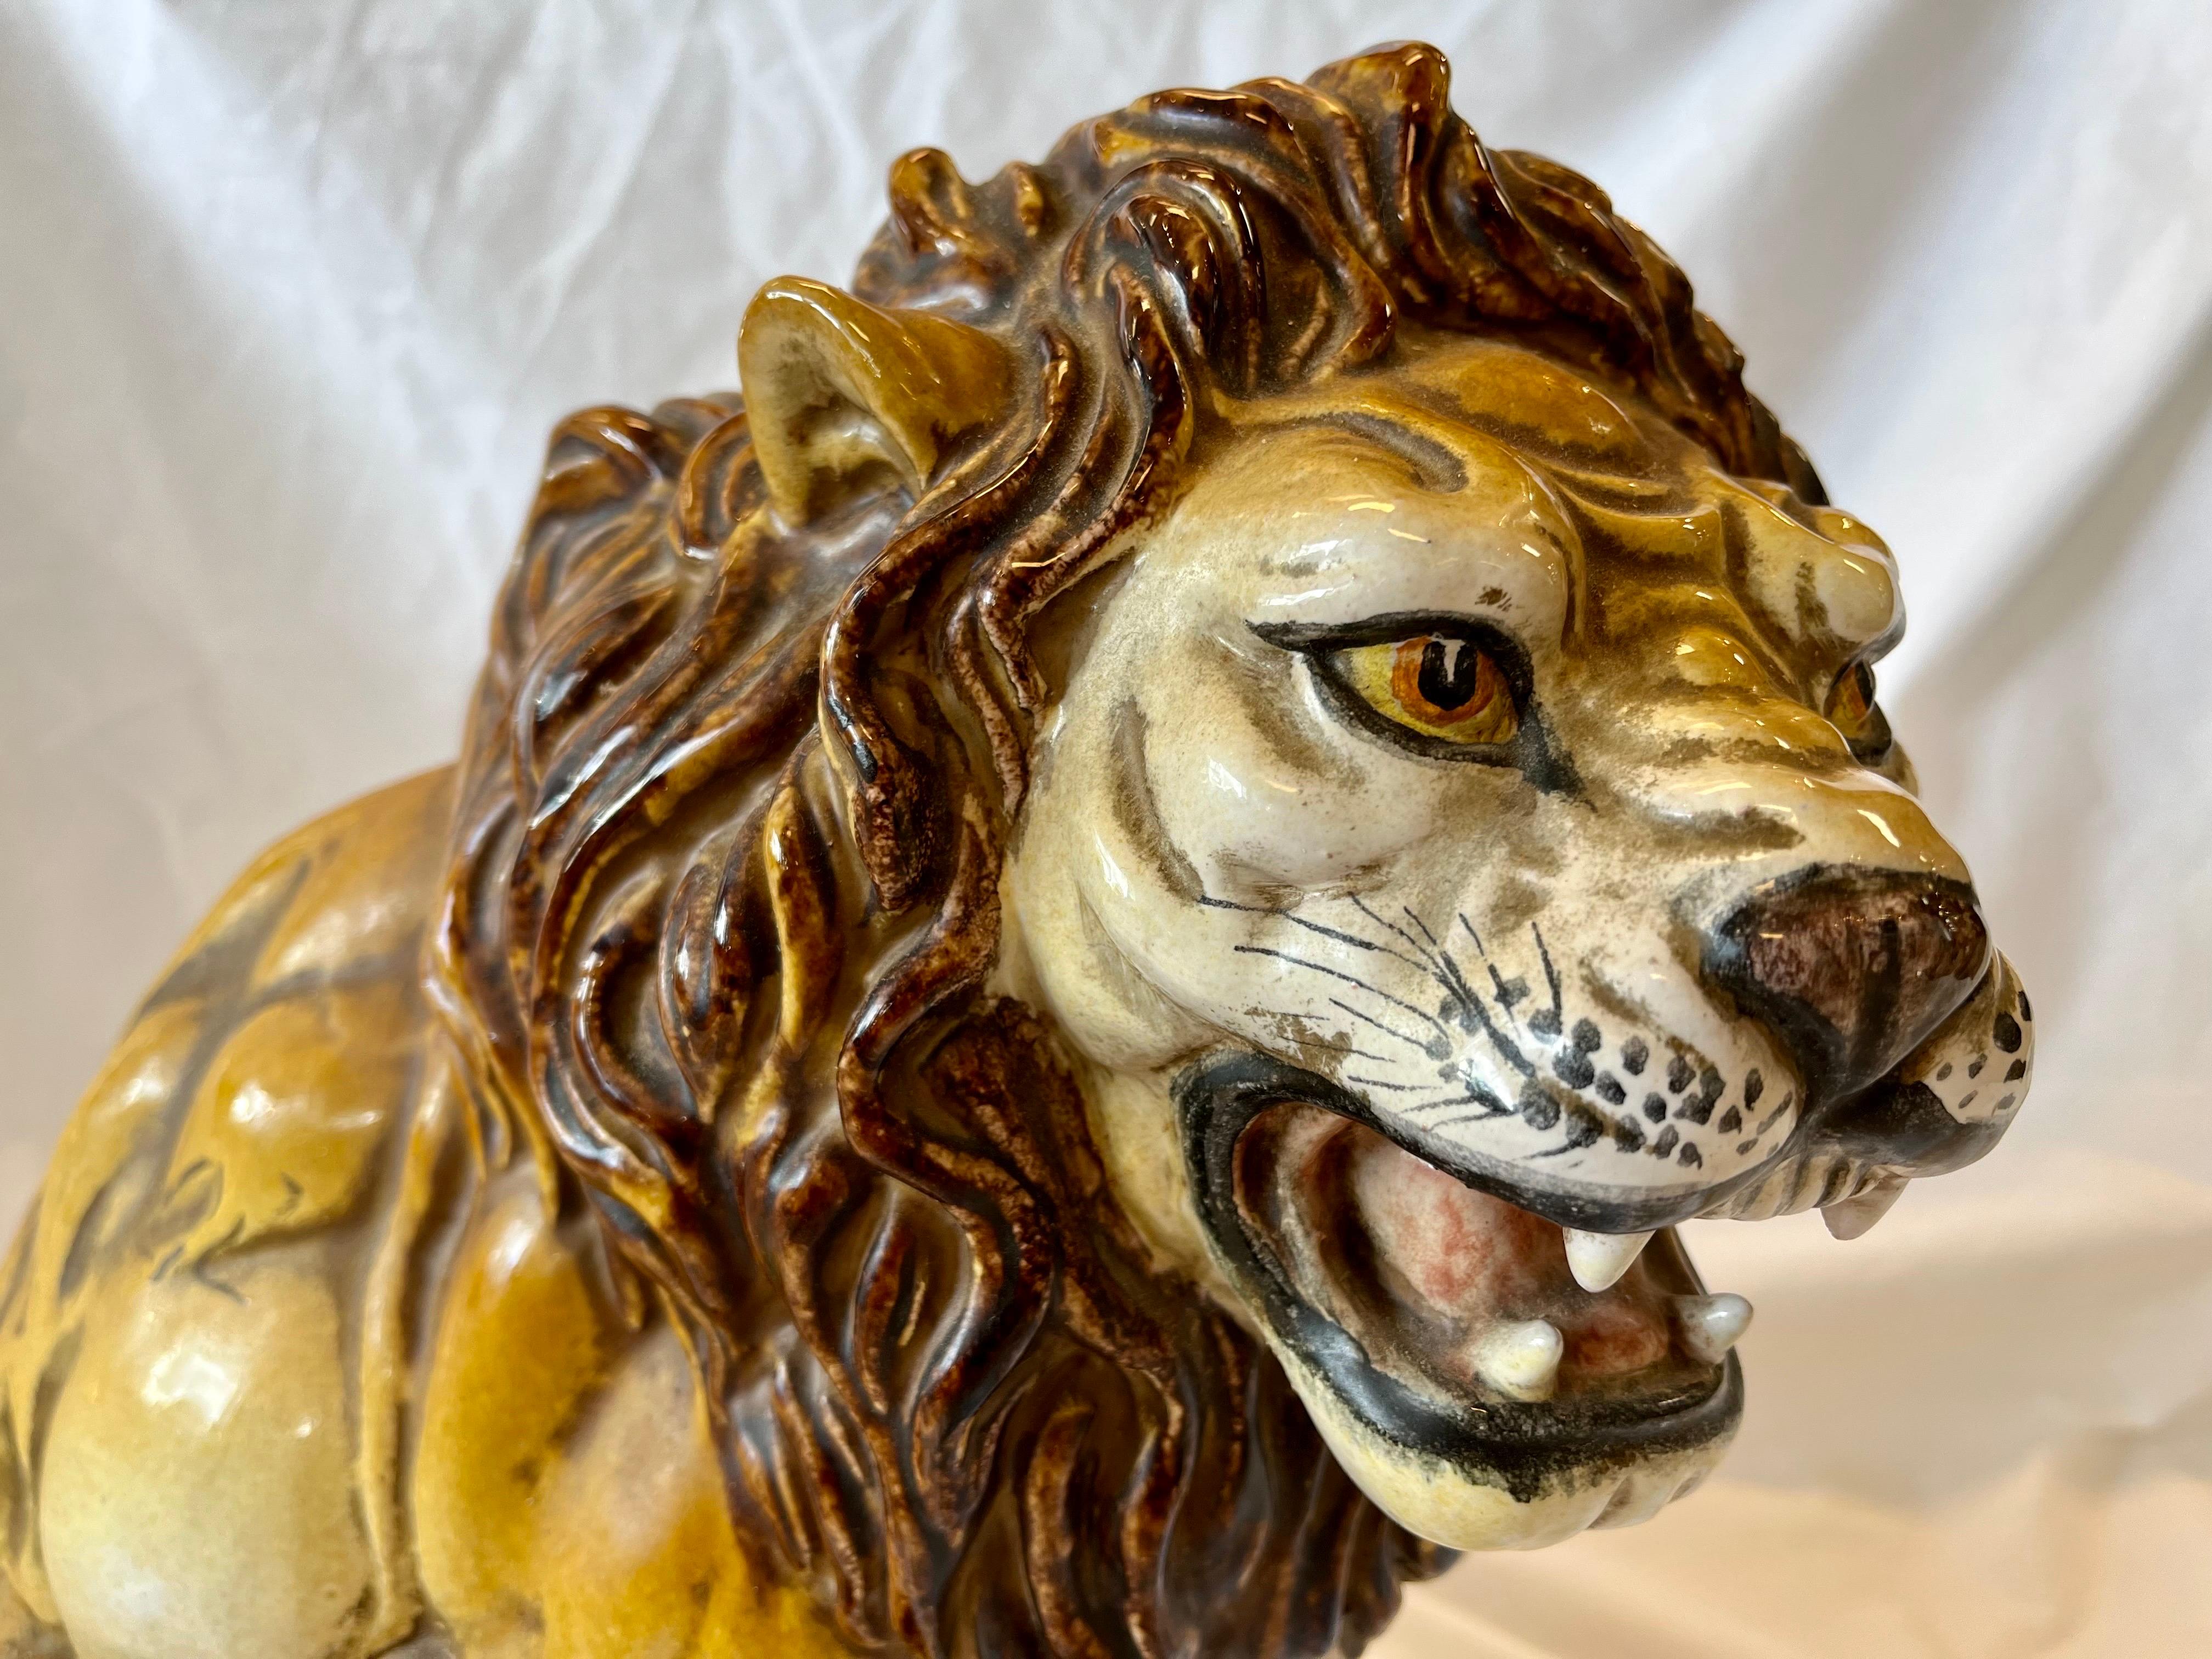 Italian Majolica Midcentury Terracotta Glazed Roaring Seated Lion Sculpture For Sale 3